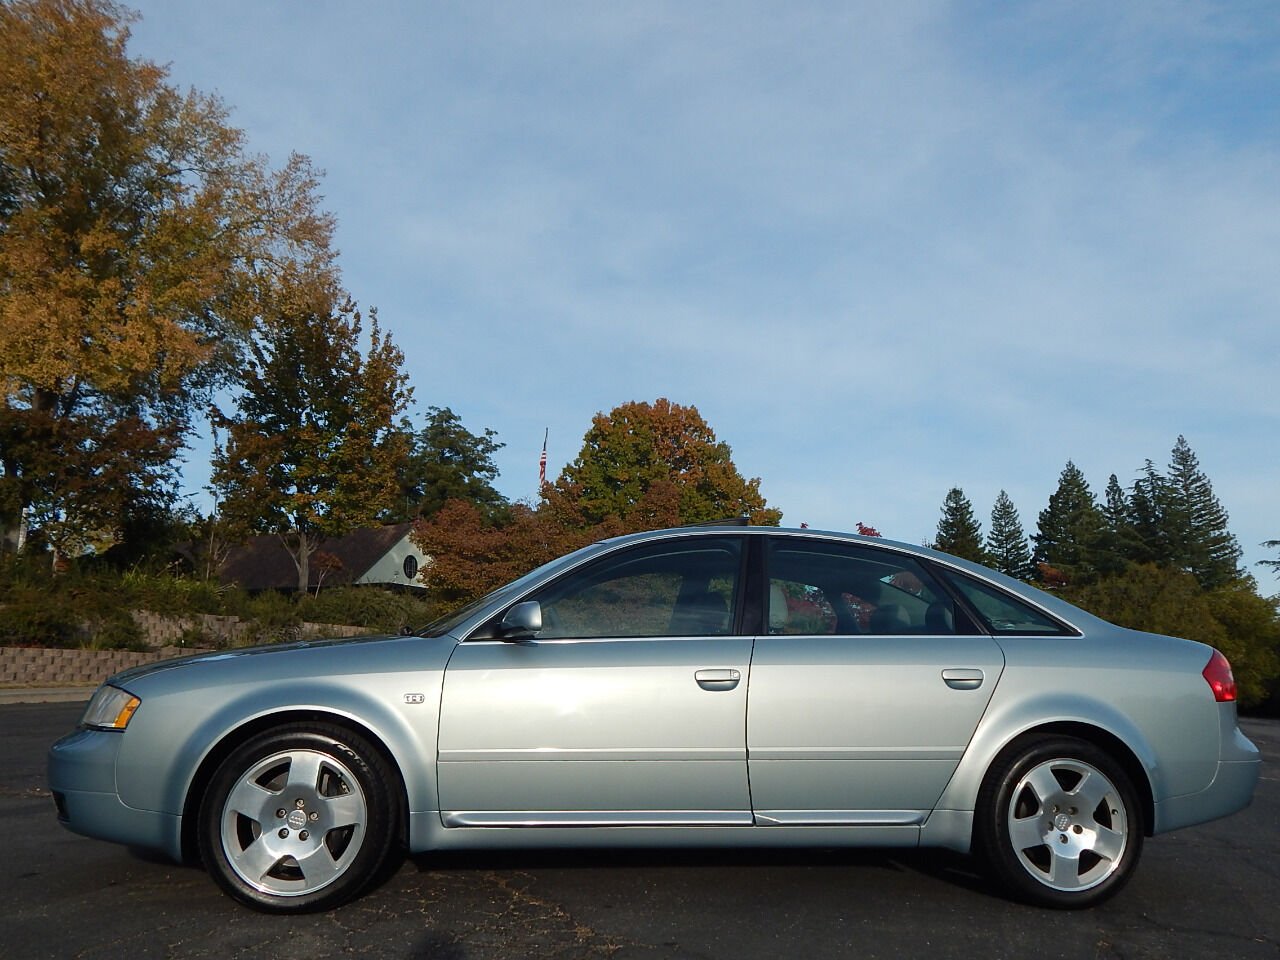 2002 Audi A6 For Sale - Carsforsale.com®